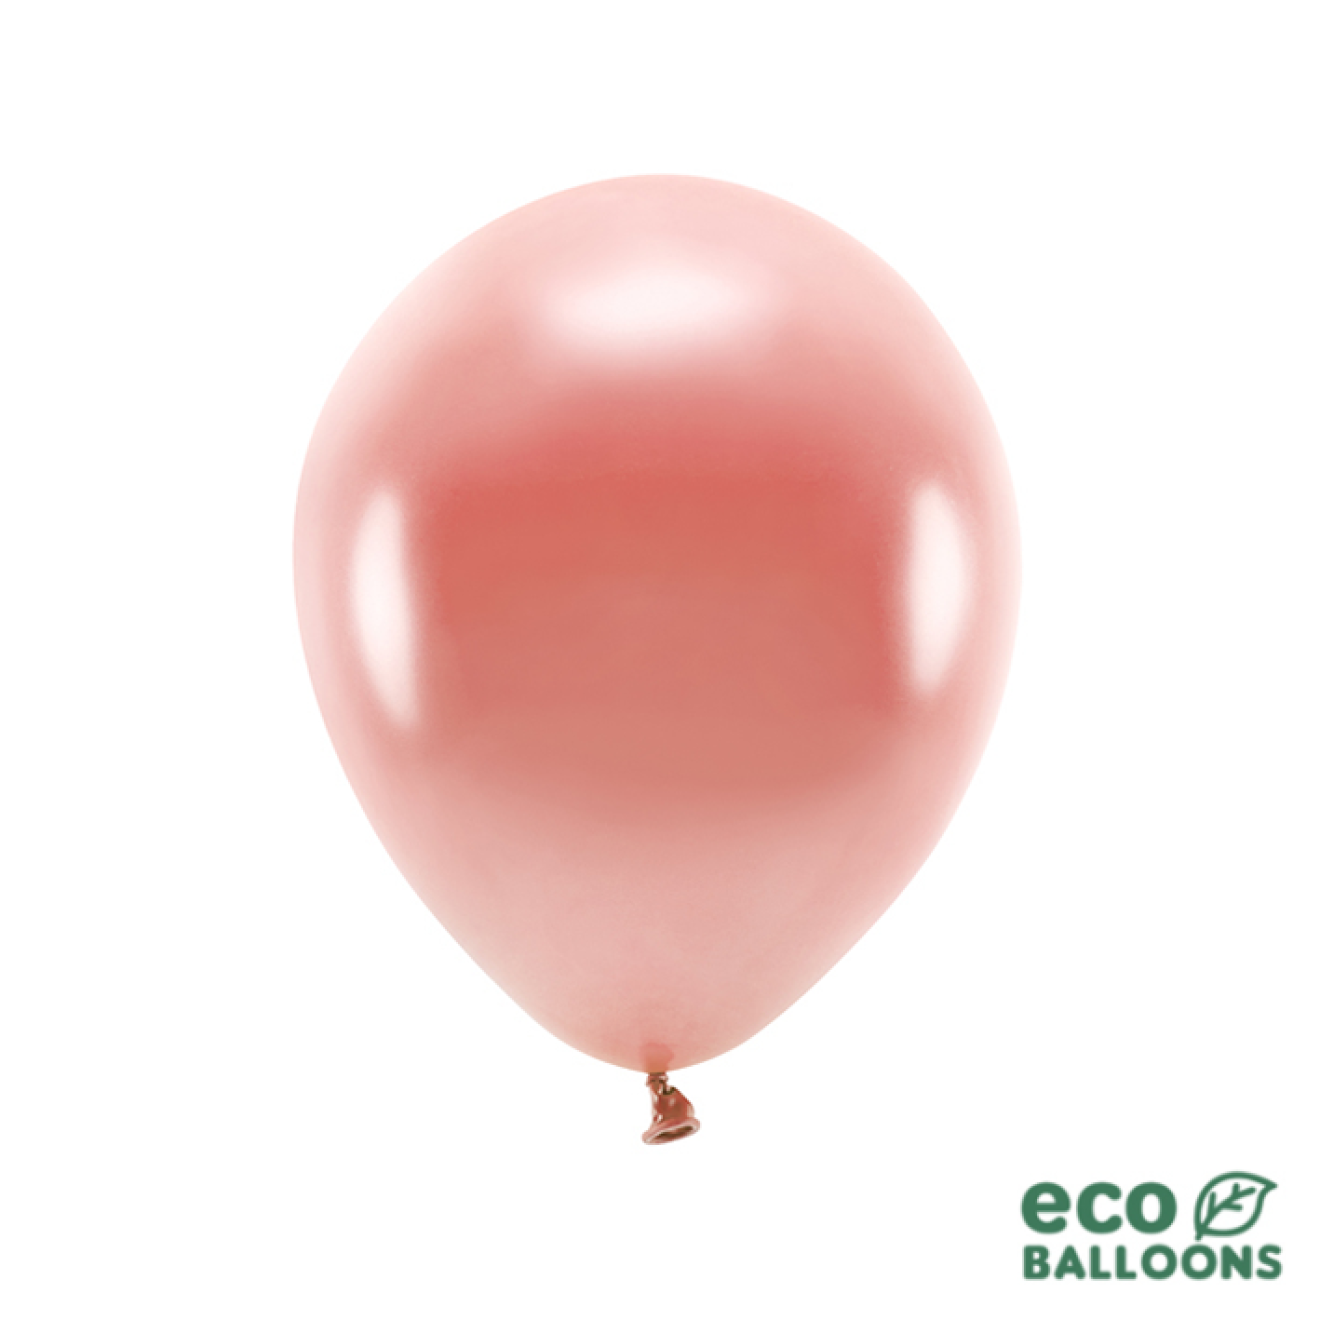 100 ECO-Luftballons - Ø 30cm - Metallic - Rosegold